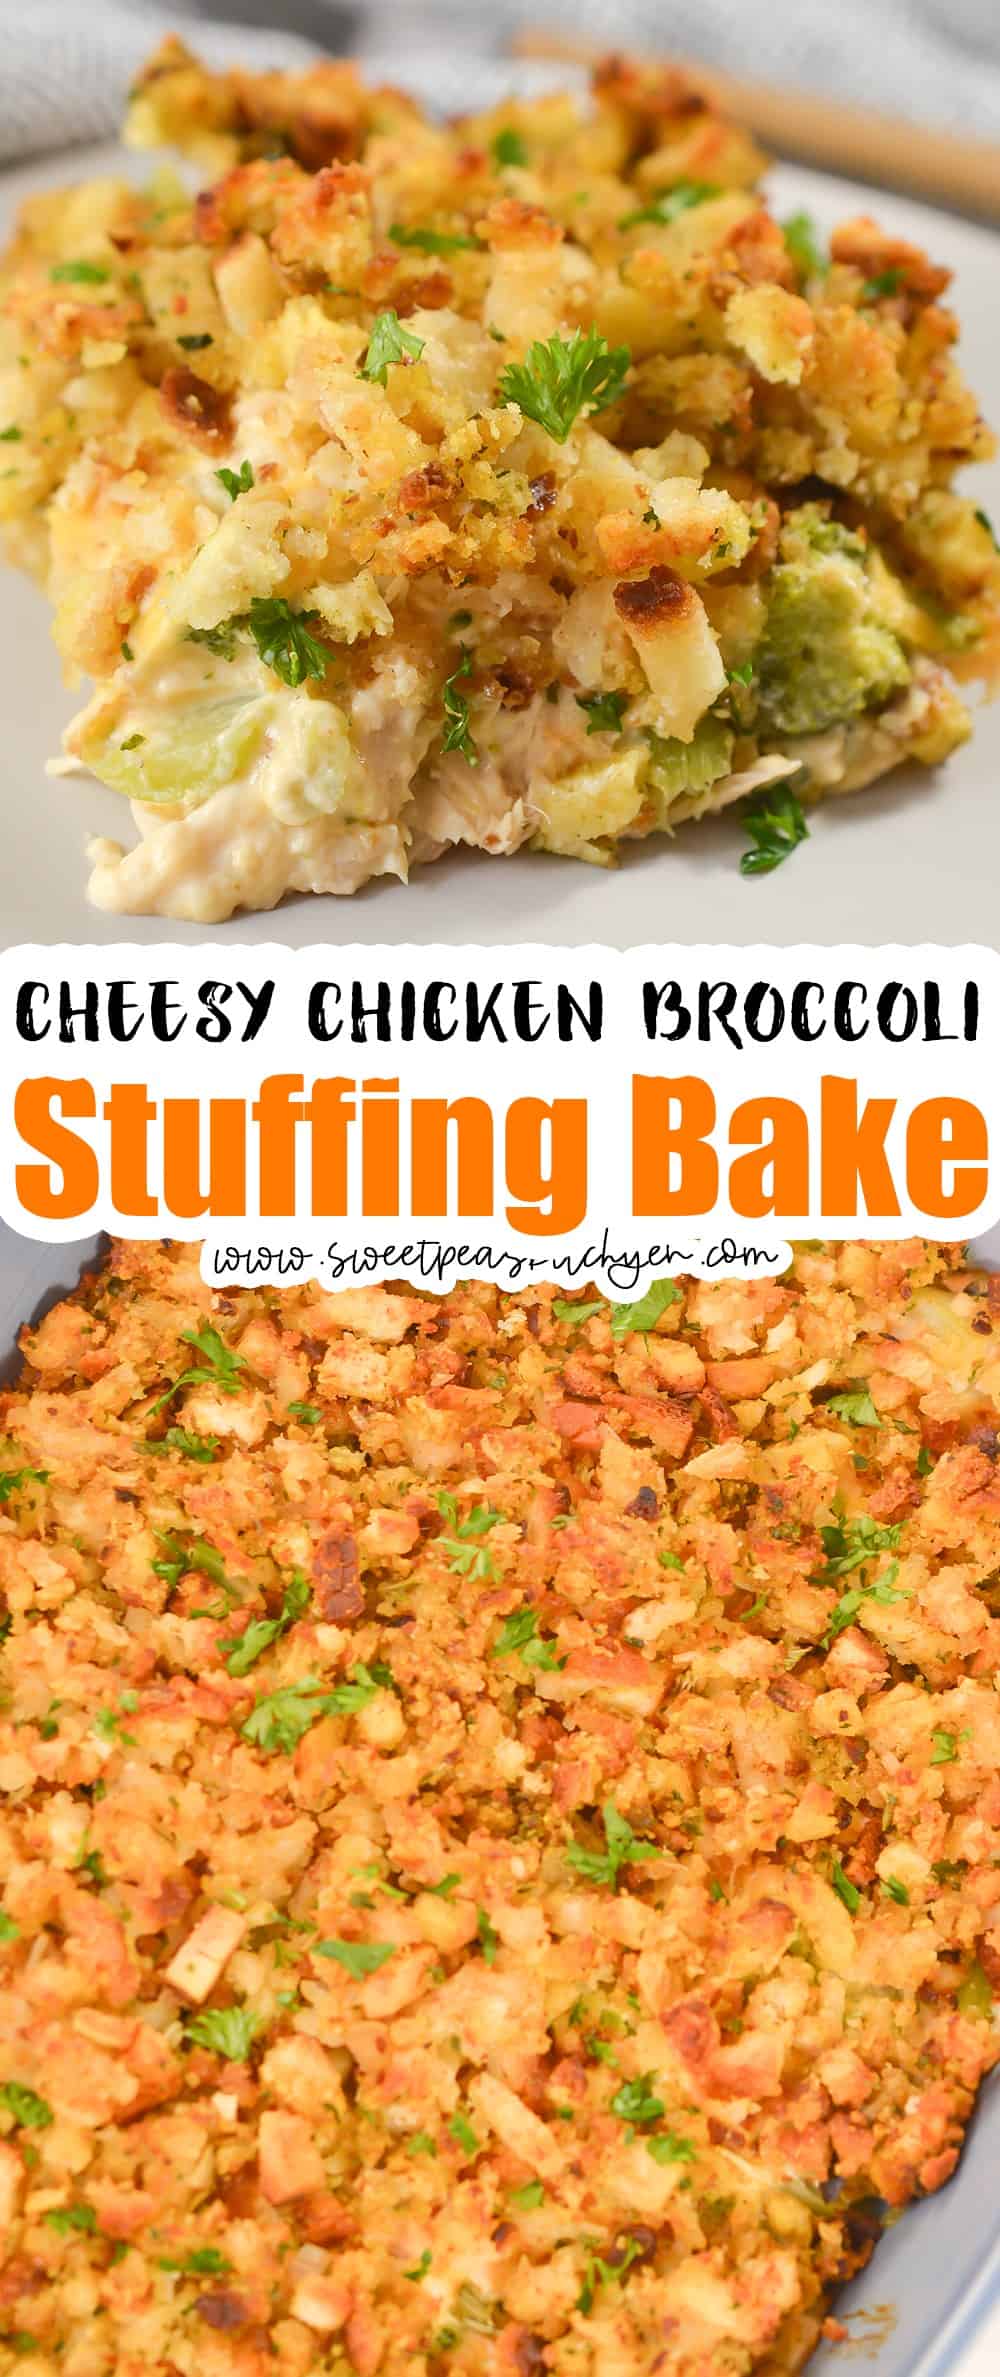 Cheesy Chicken Broccoli Stuffing Bake